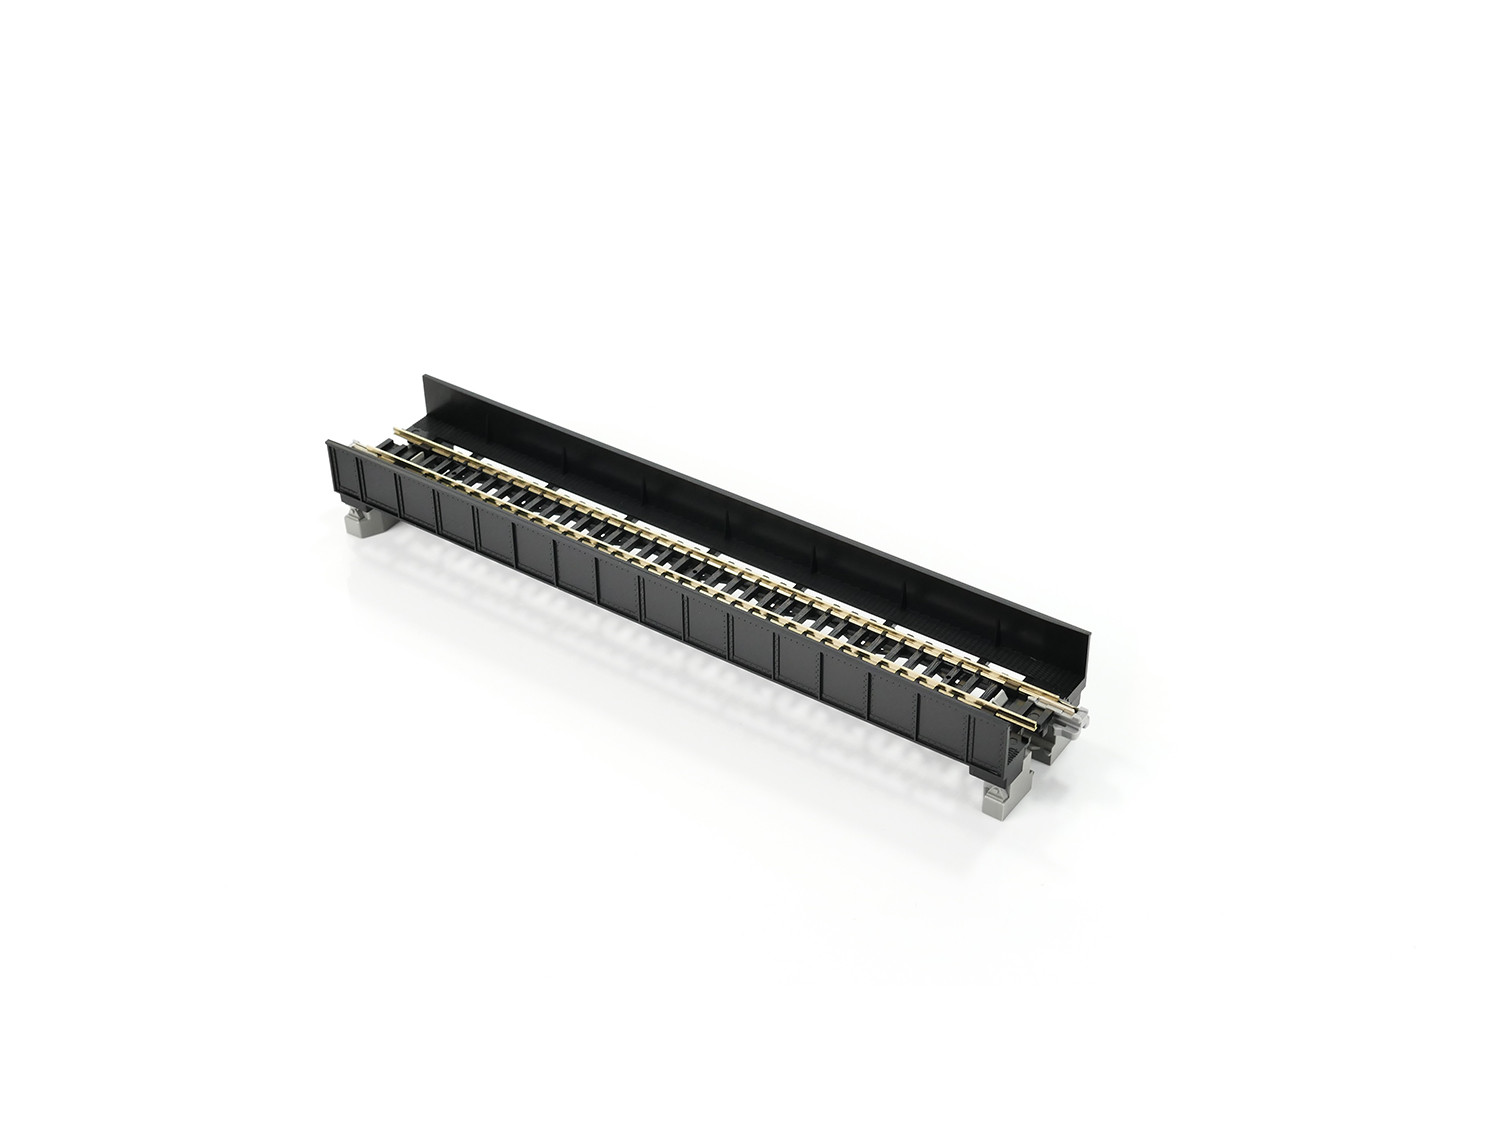 Unitrack (S186T) Straight Plate Girder Bridge Black 186mm